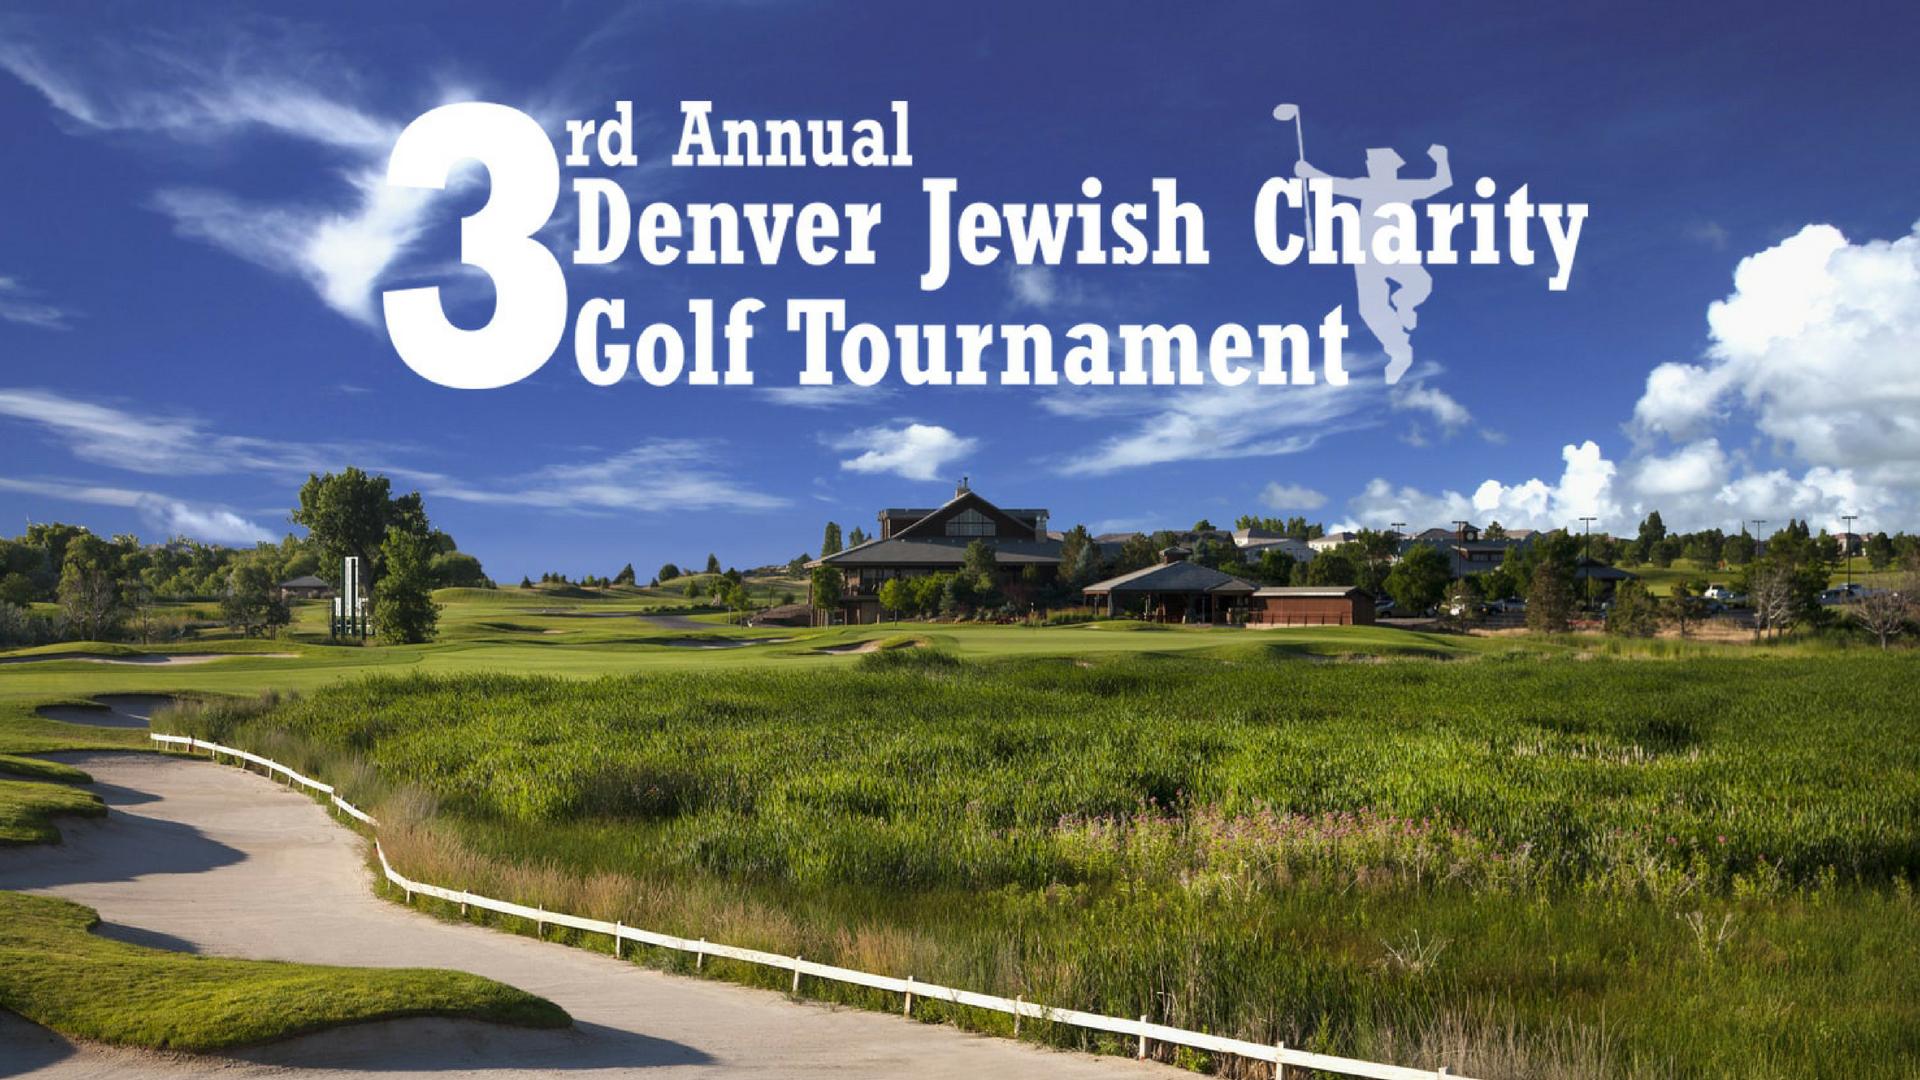 3rd Annual Jewish Charity Golf Tournament